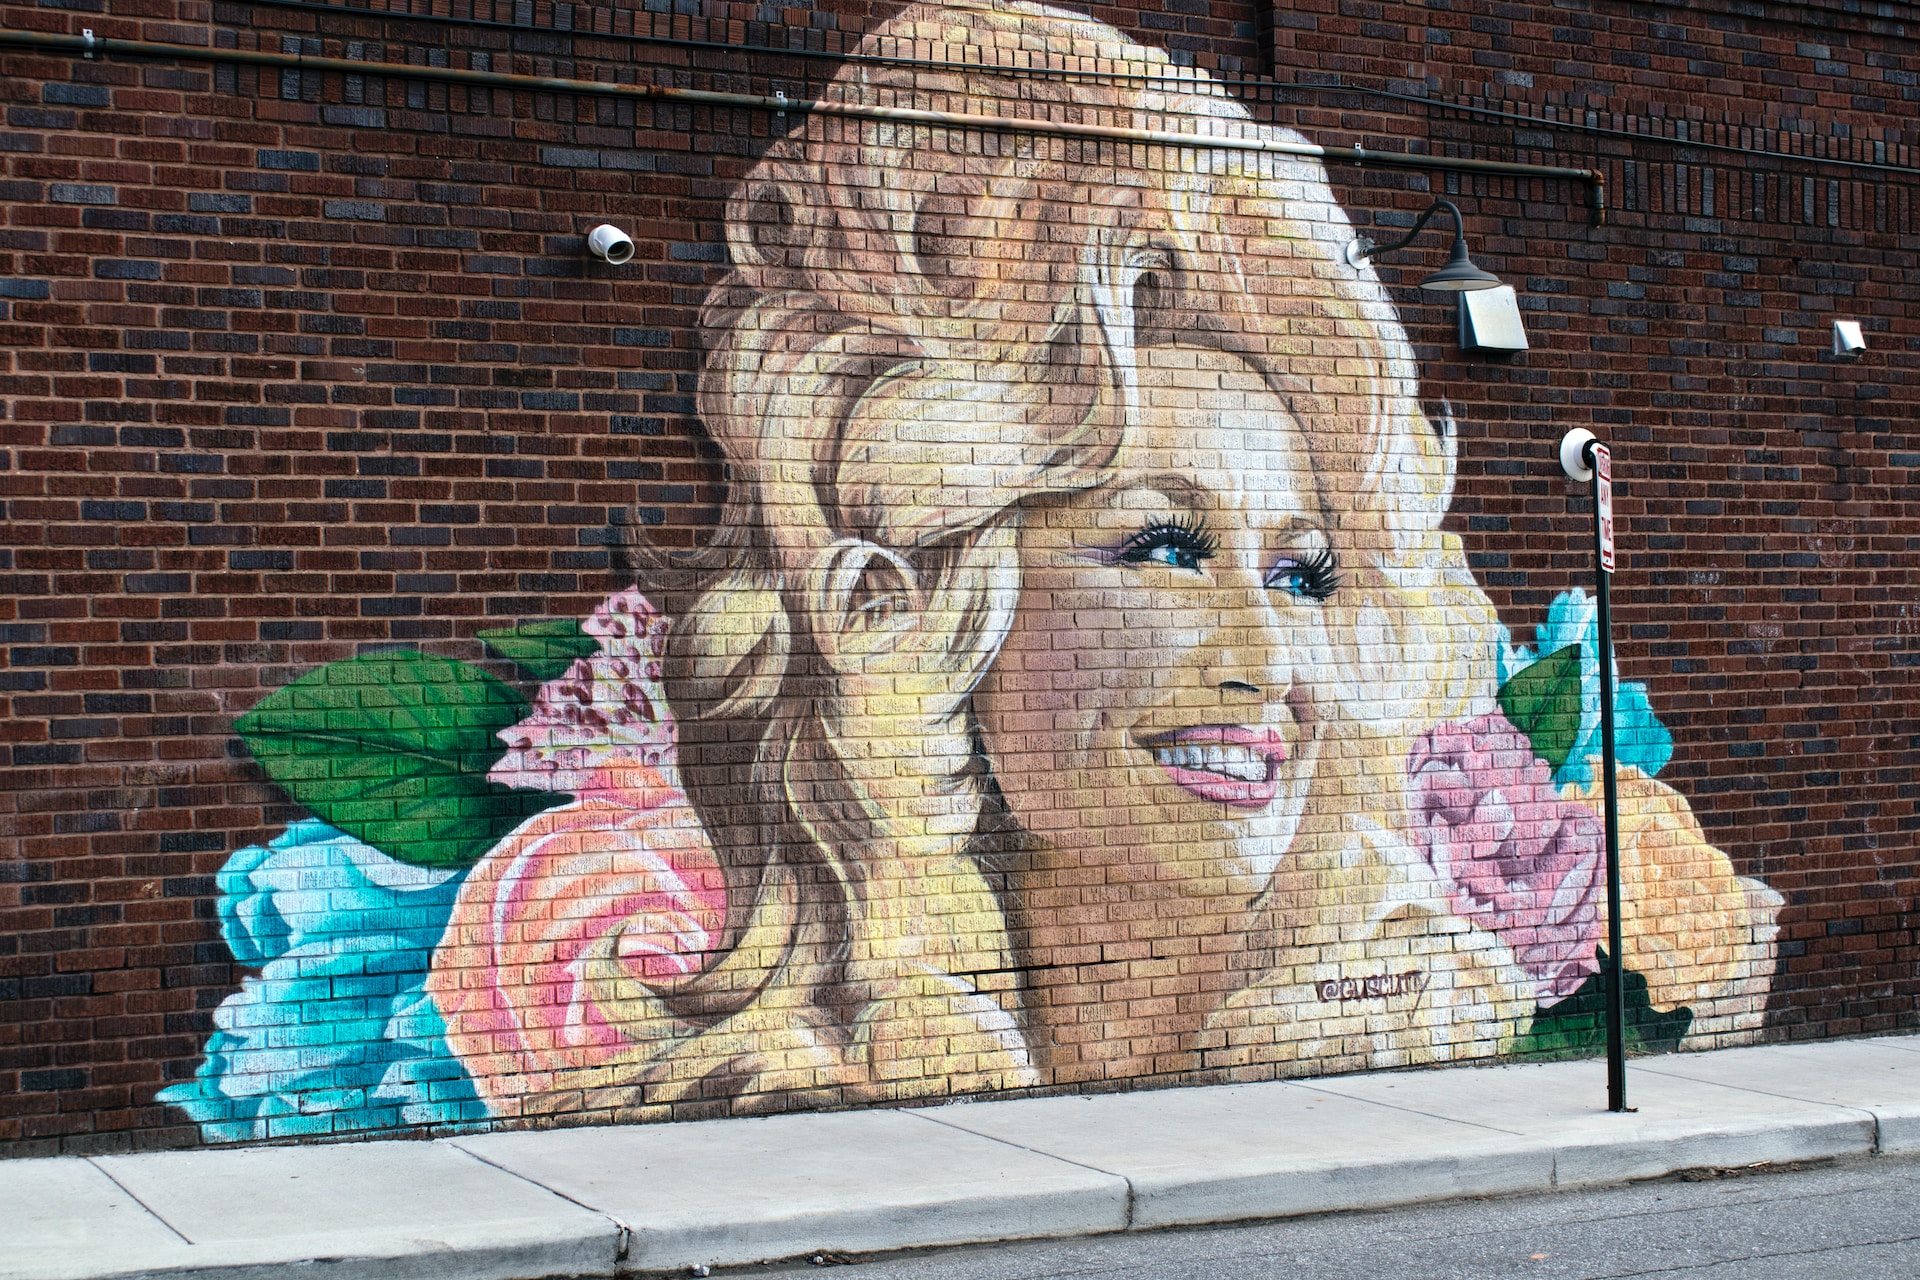 A mural of Dolly Parton on bricks.